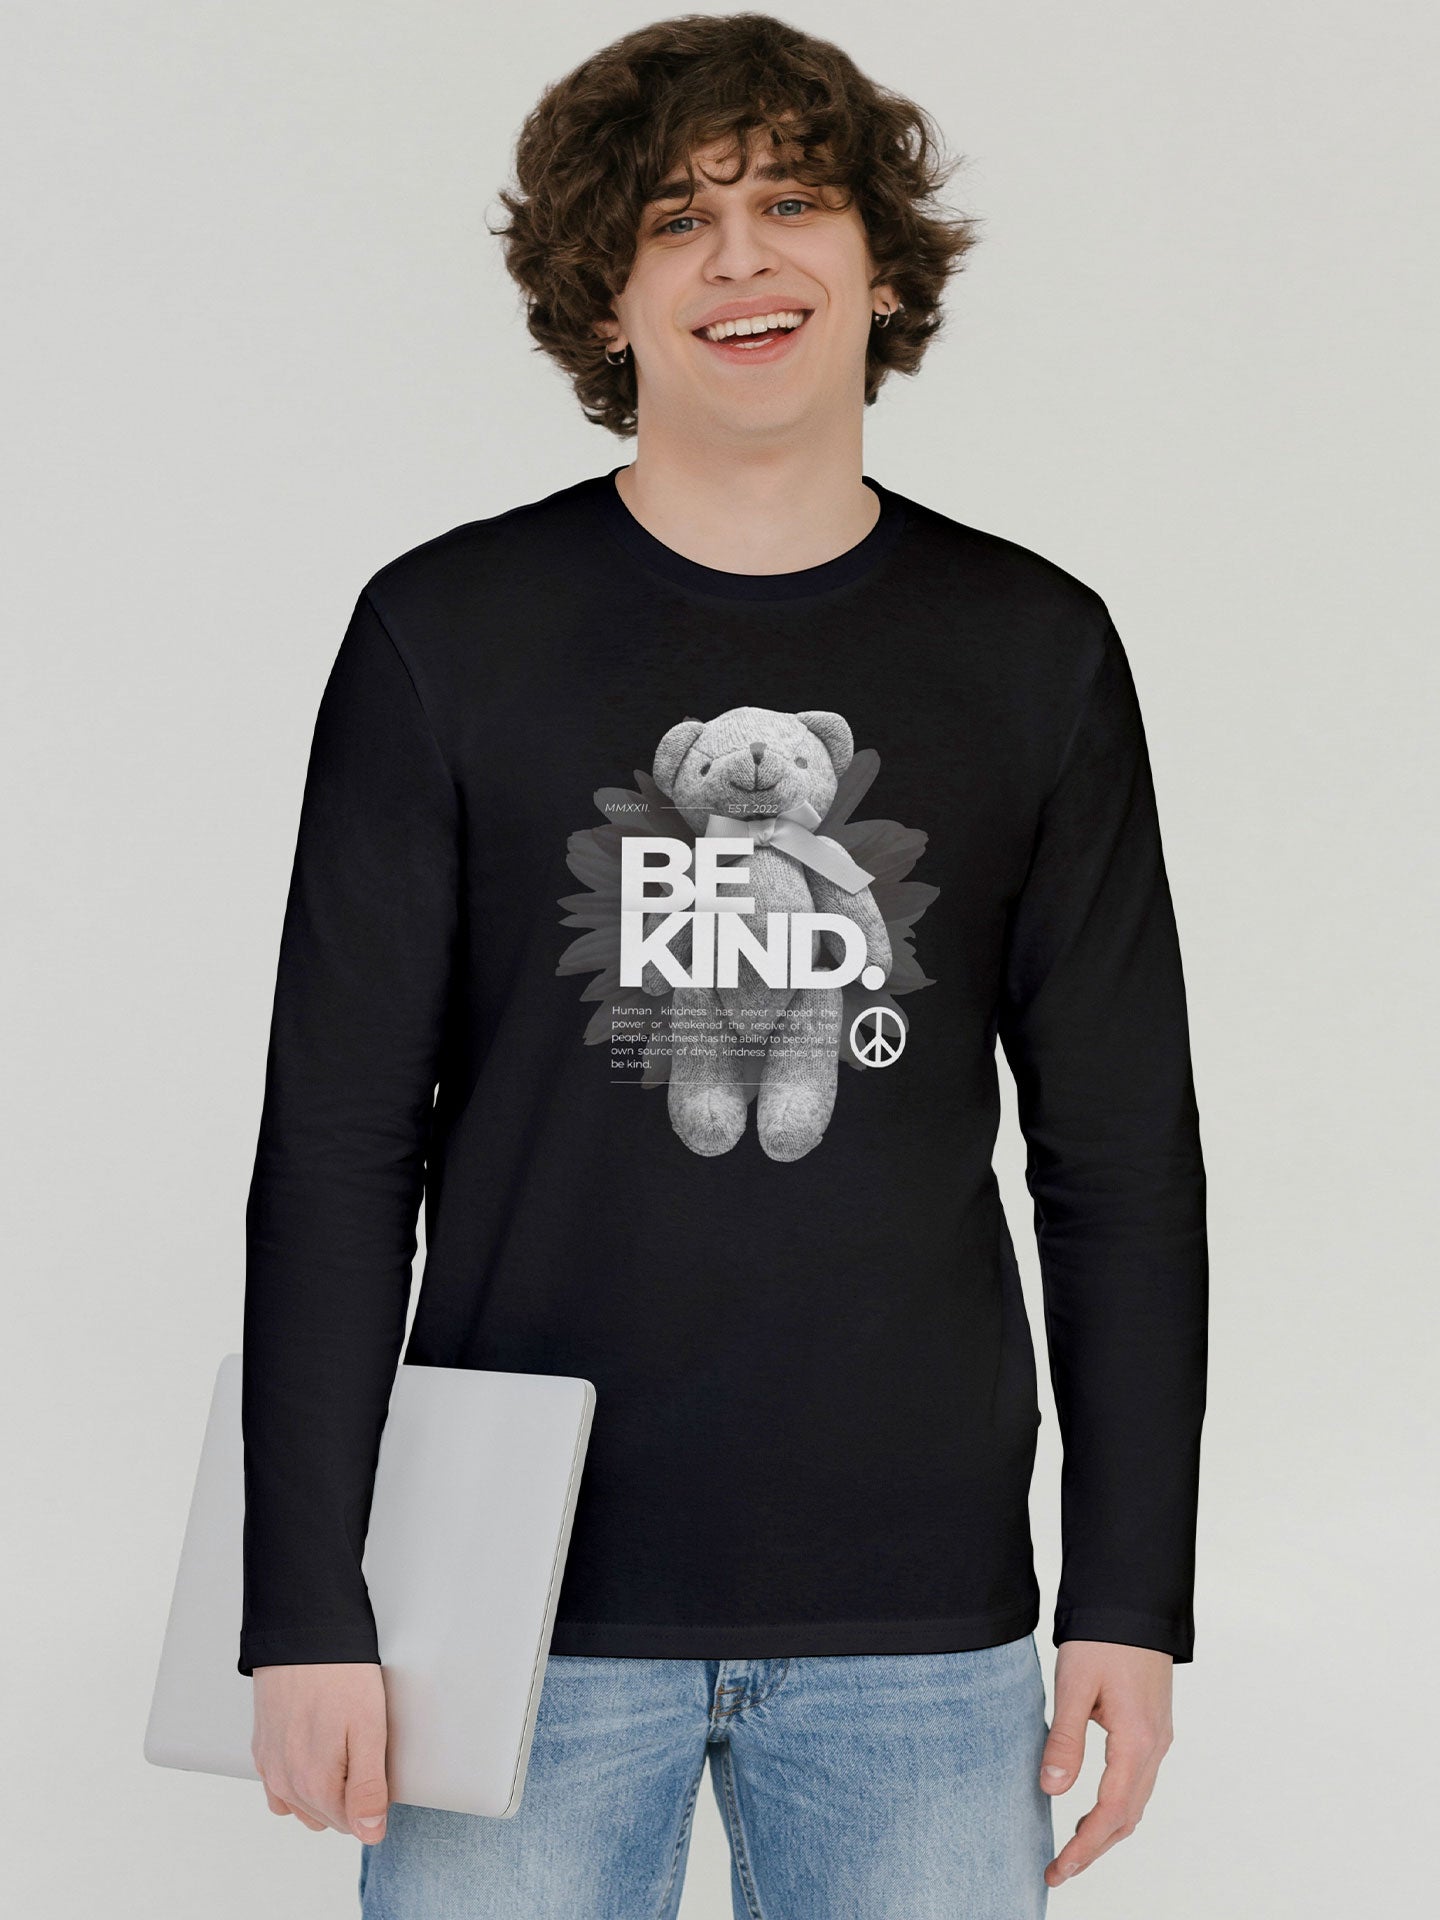 Men's Black Be Kind Printed Full-Sleeve T-shirt